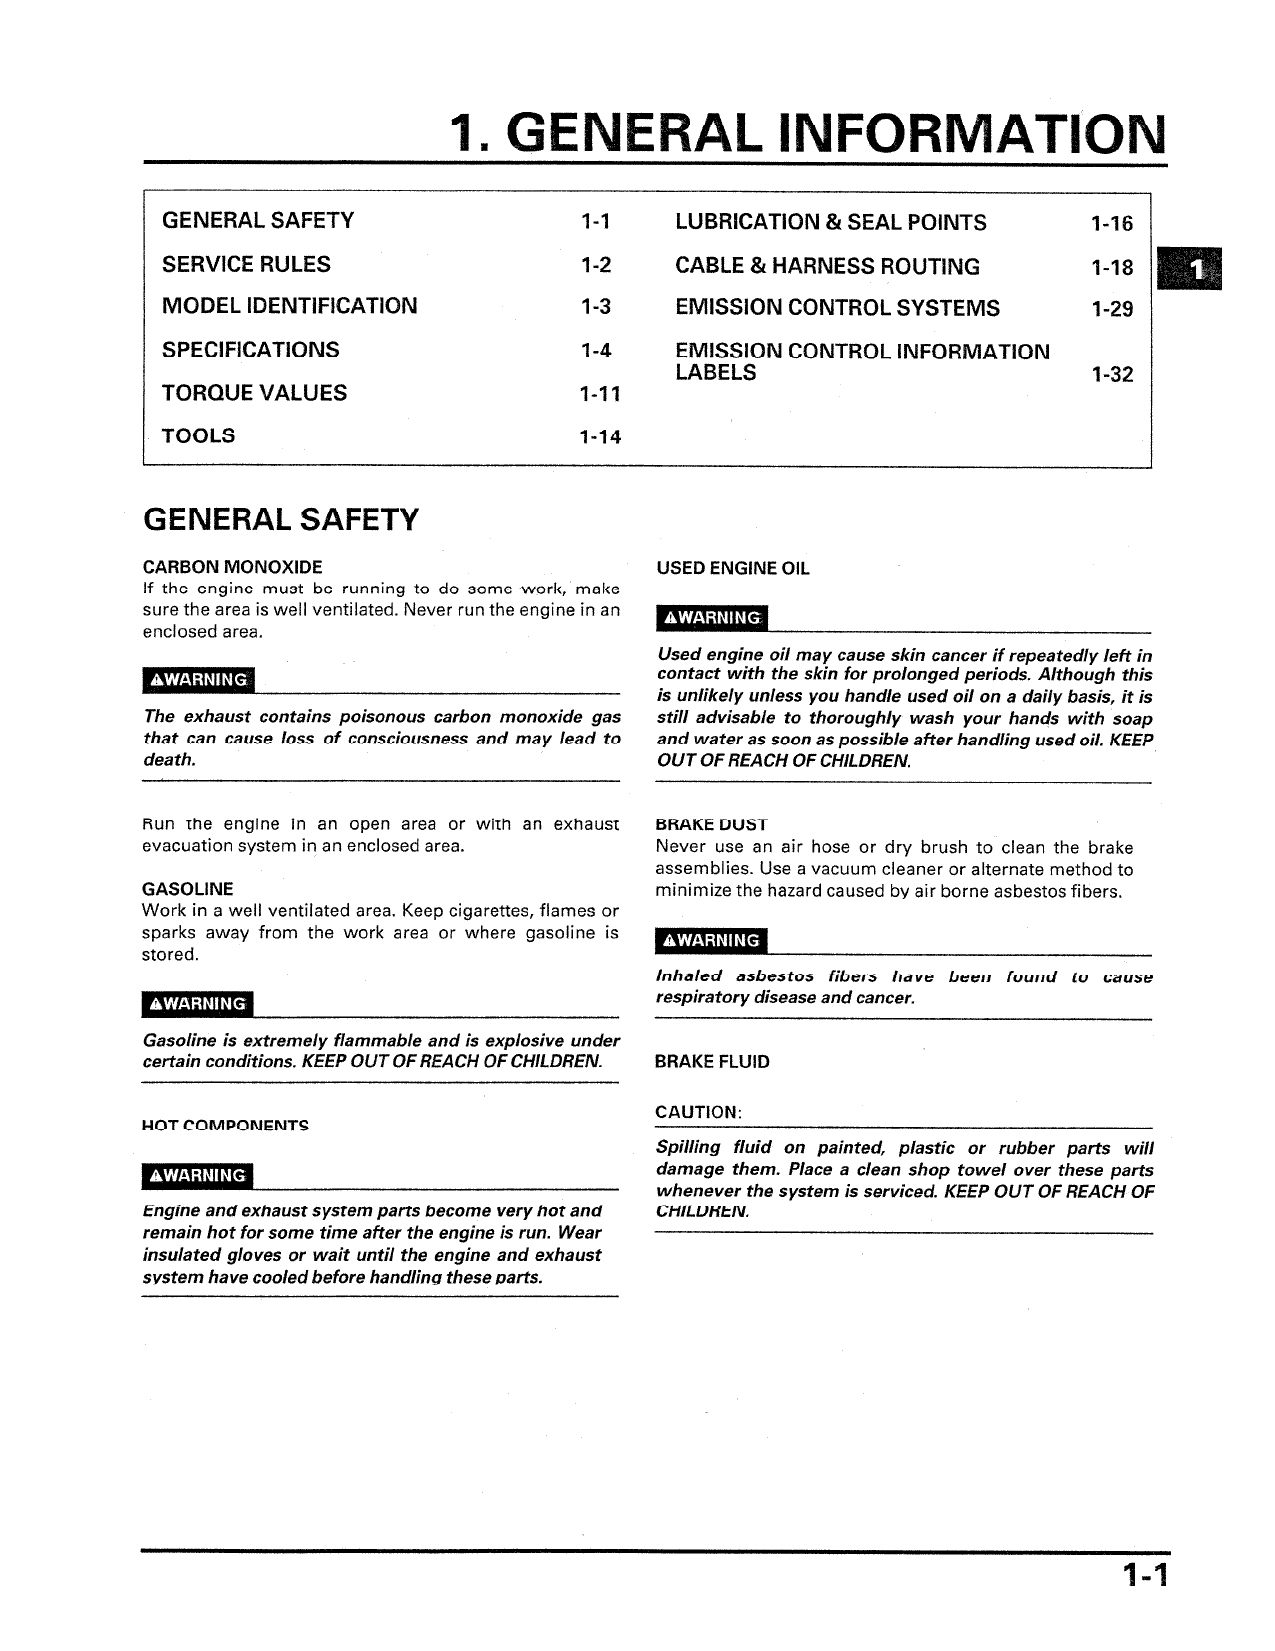 1999-2000 Honda CBR 600 F4 repair, service and shop manual Preview image 4